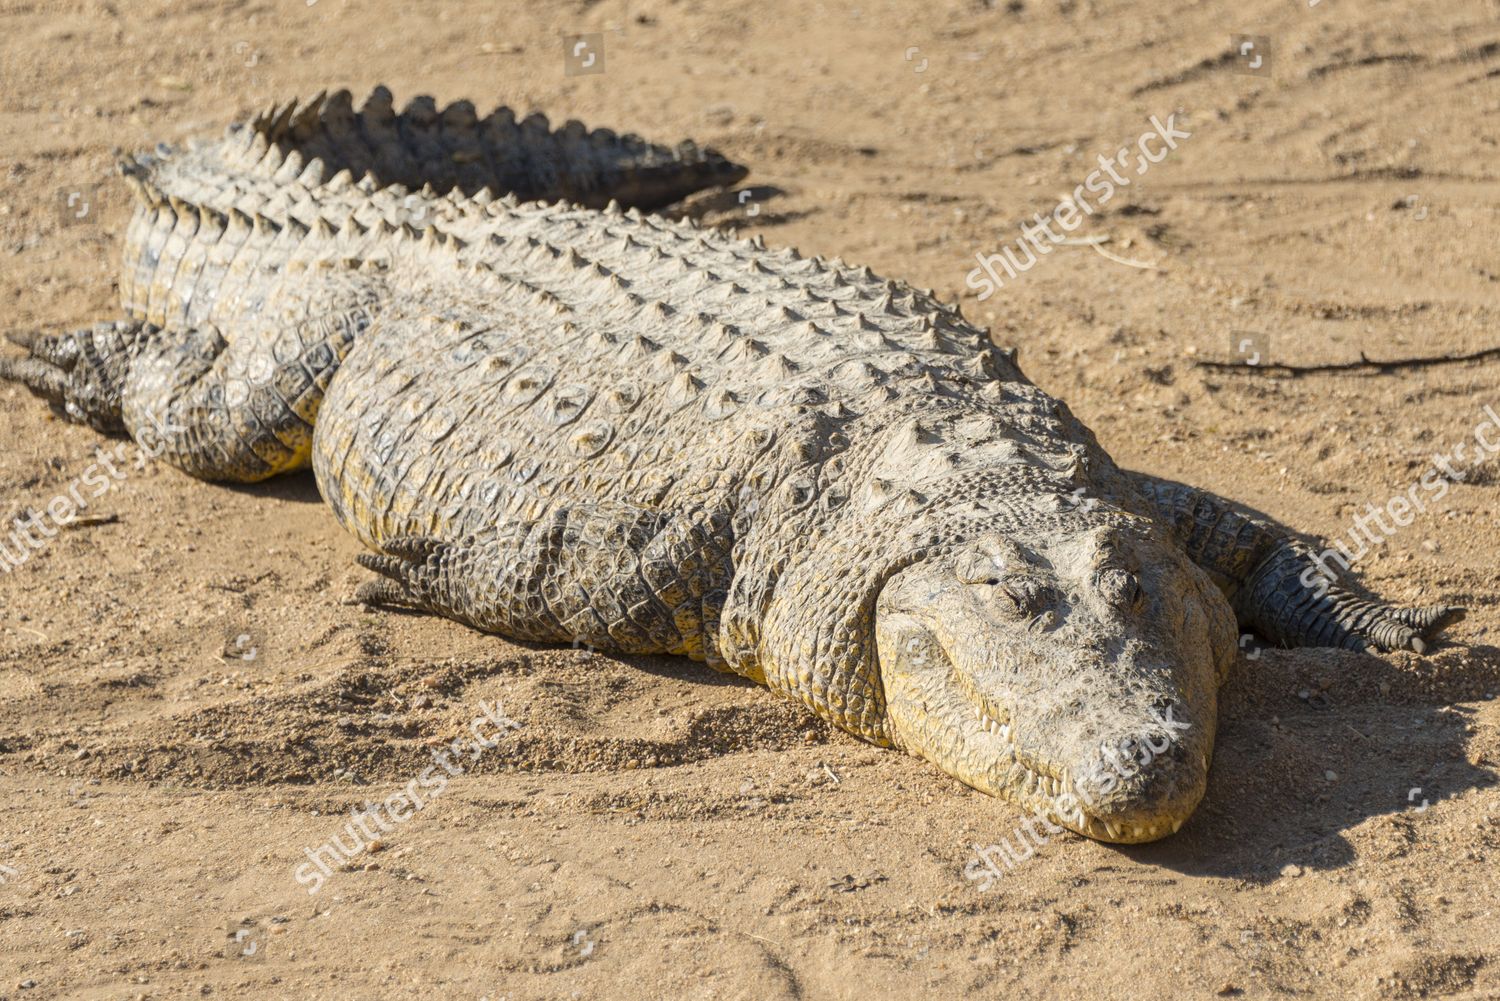 niloticus crocodile